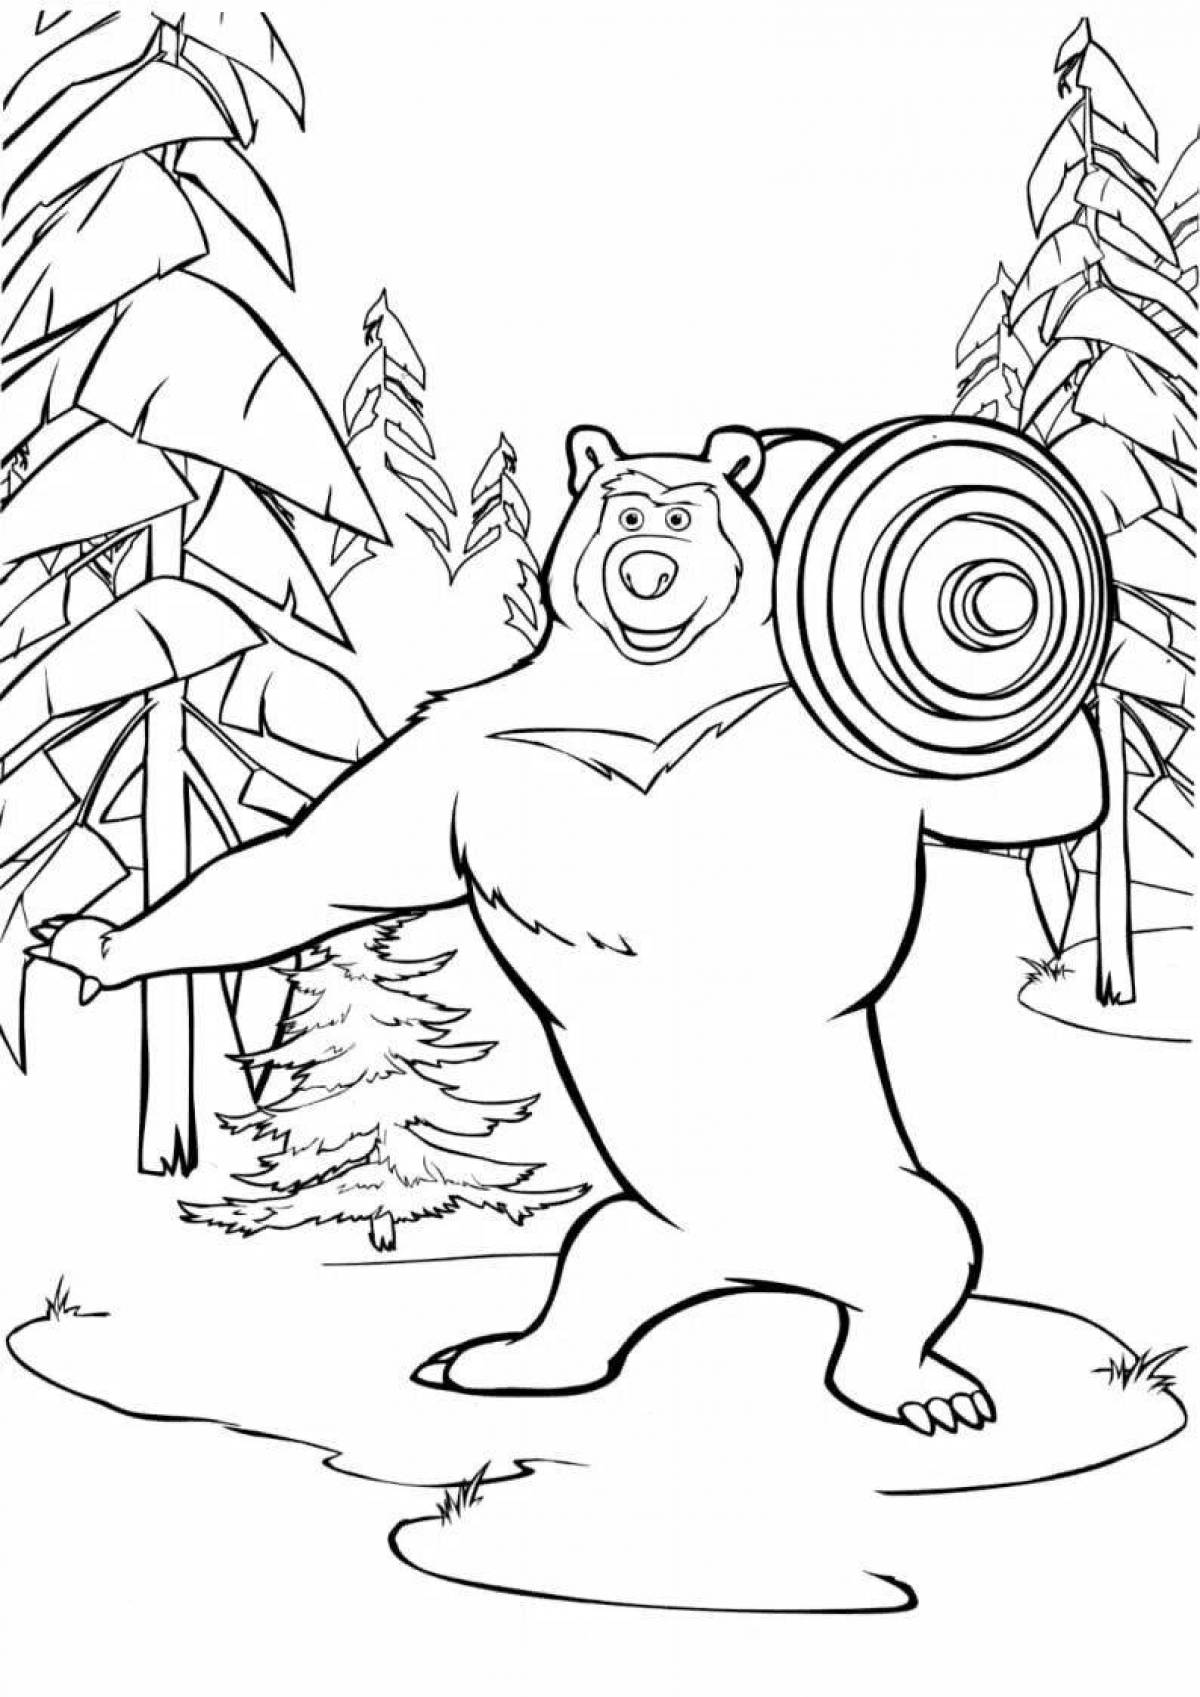 Adorable Himalayan bear coloring page